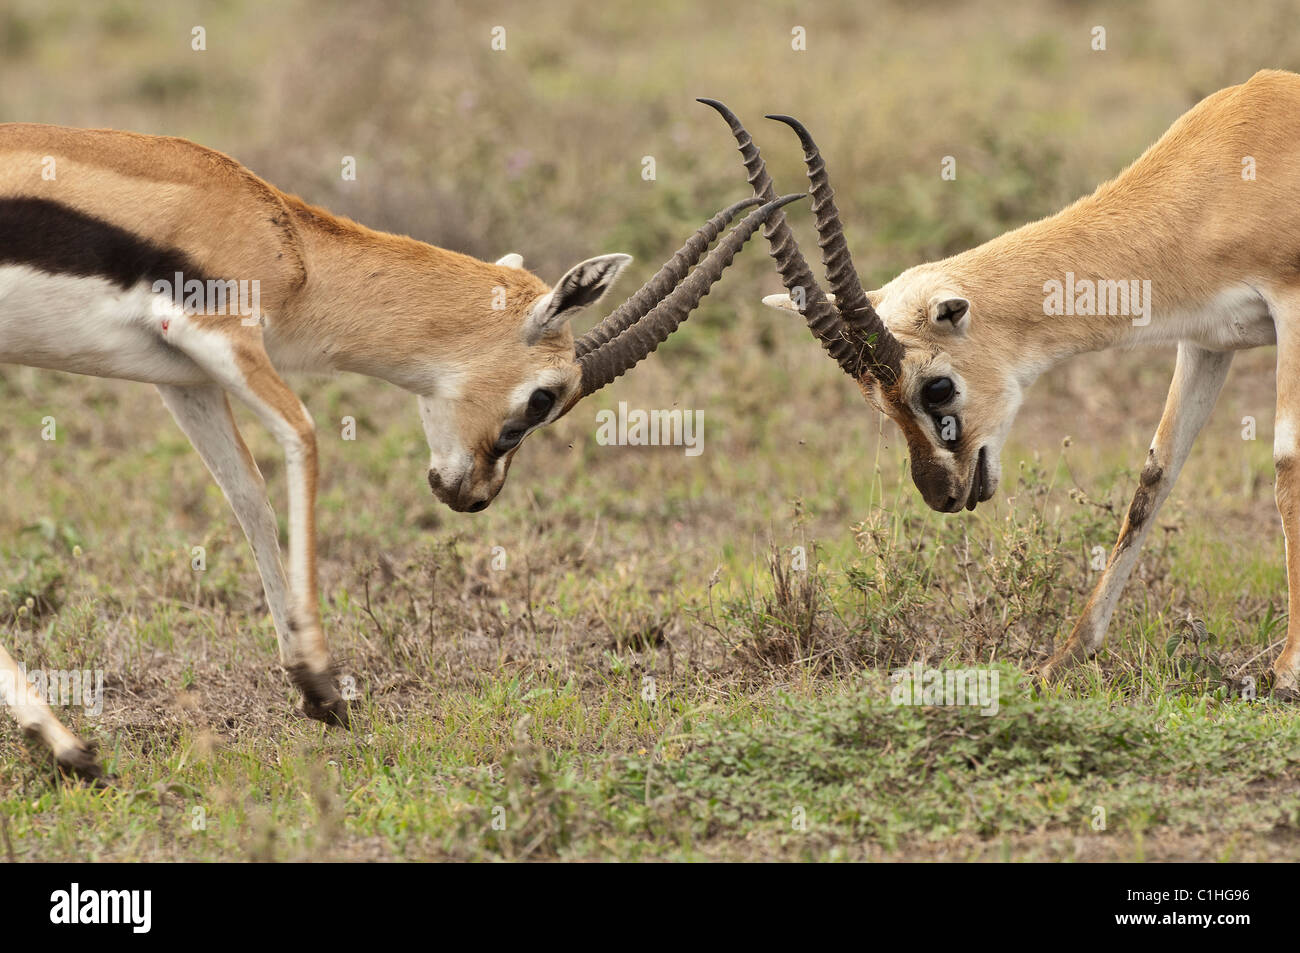 Stock photo of two male thomson's gazelles sparring. Stock Photo